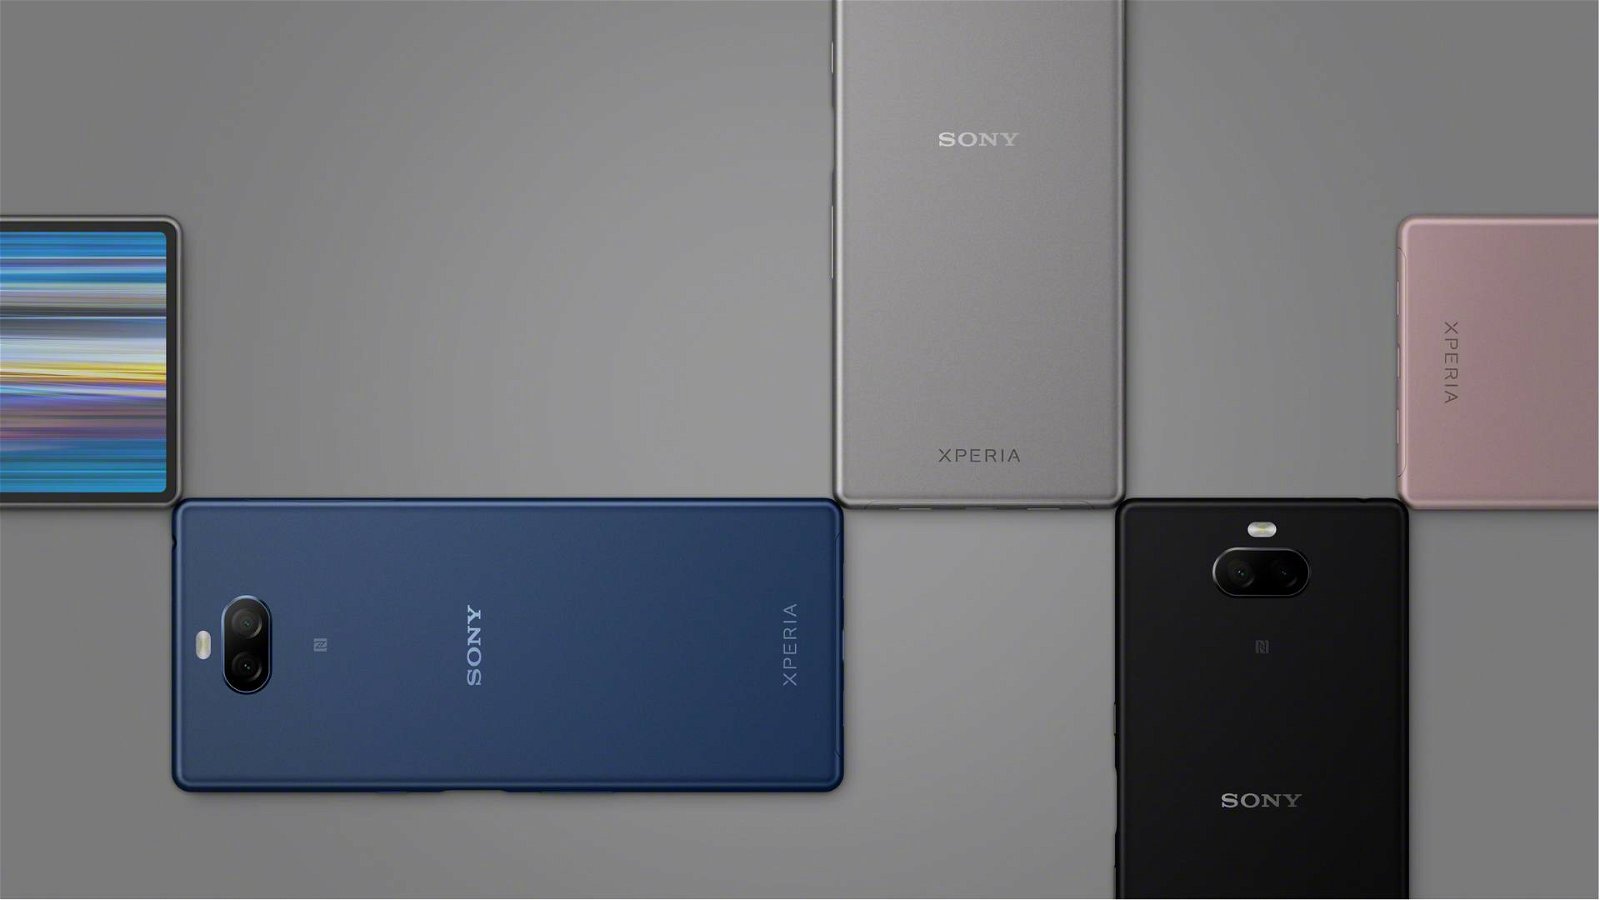 Immagine di Xperia 10, Xperia 10 Plus e Xperia L3: i nuovi smartphone di fascia media targati Sony